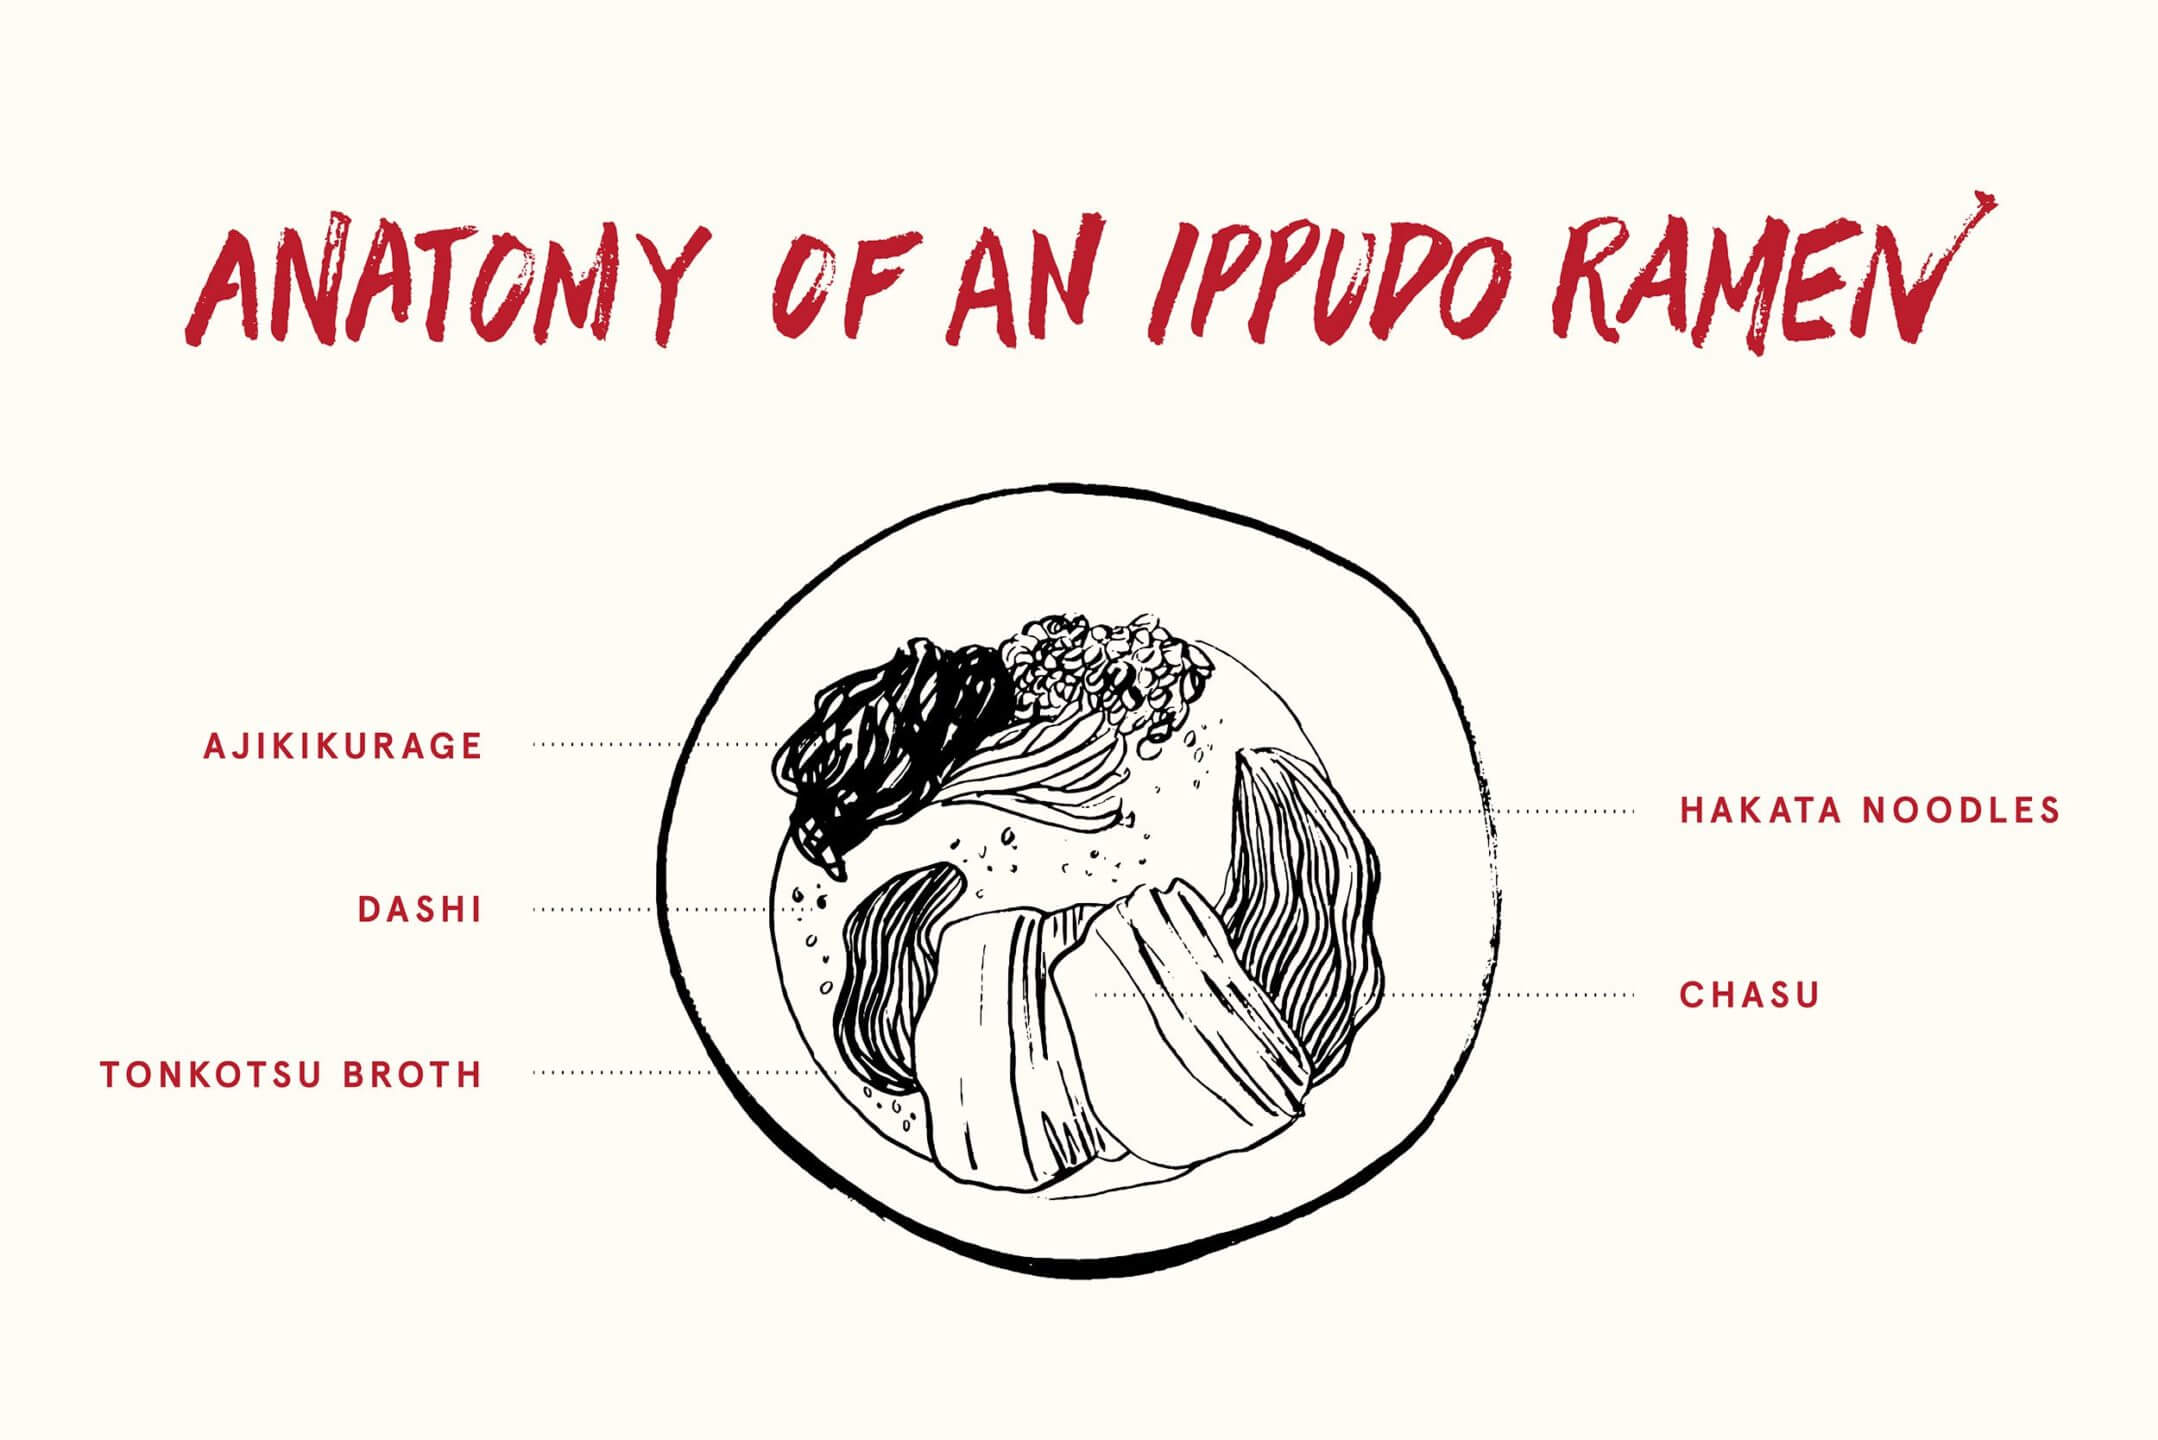 An illustration of the anatomy of ramen designed for Ippudo